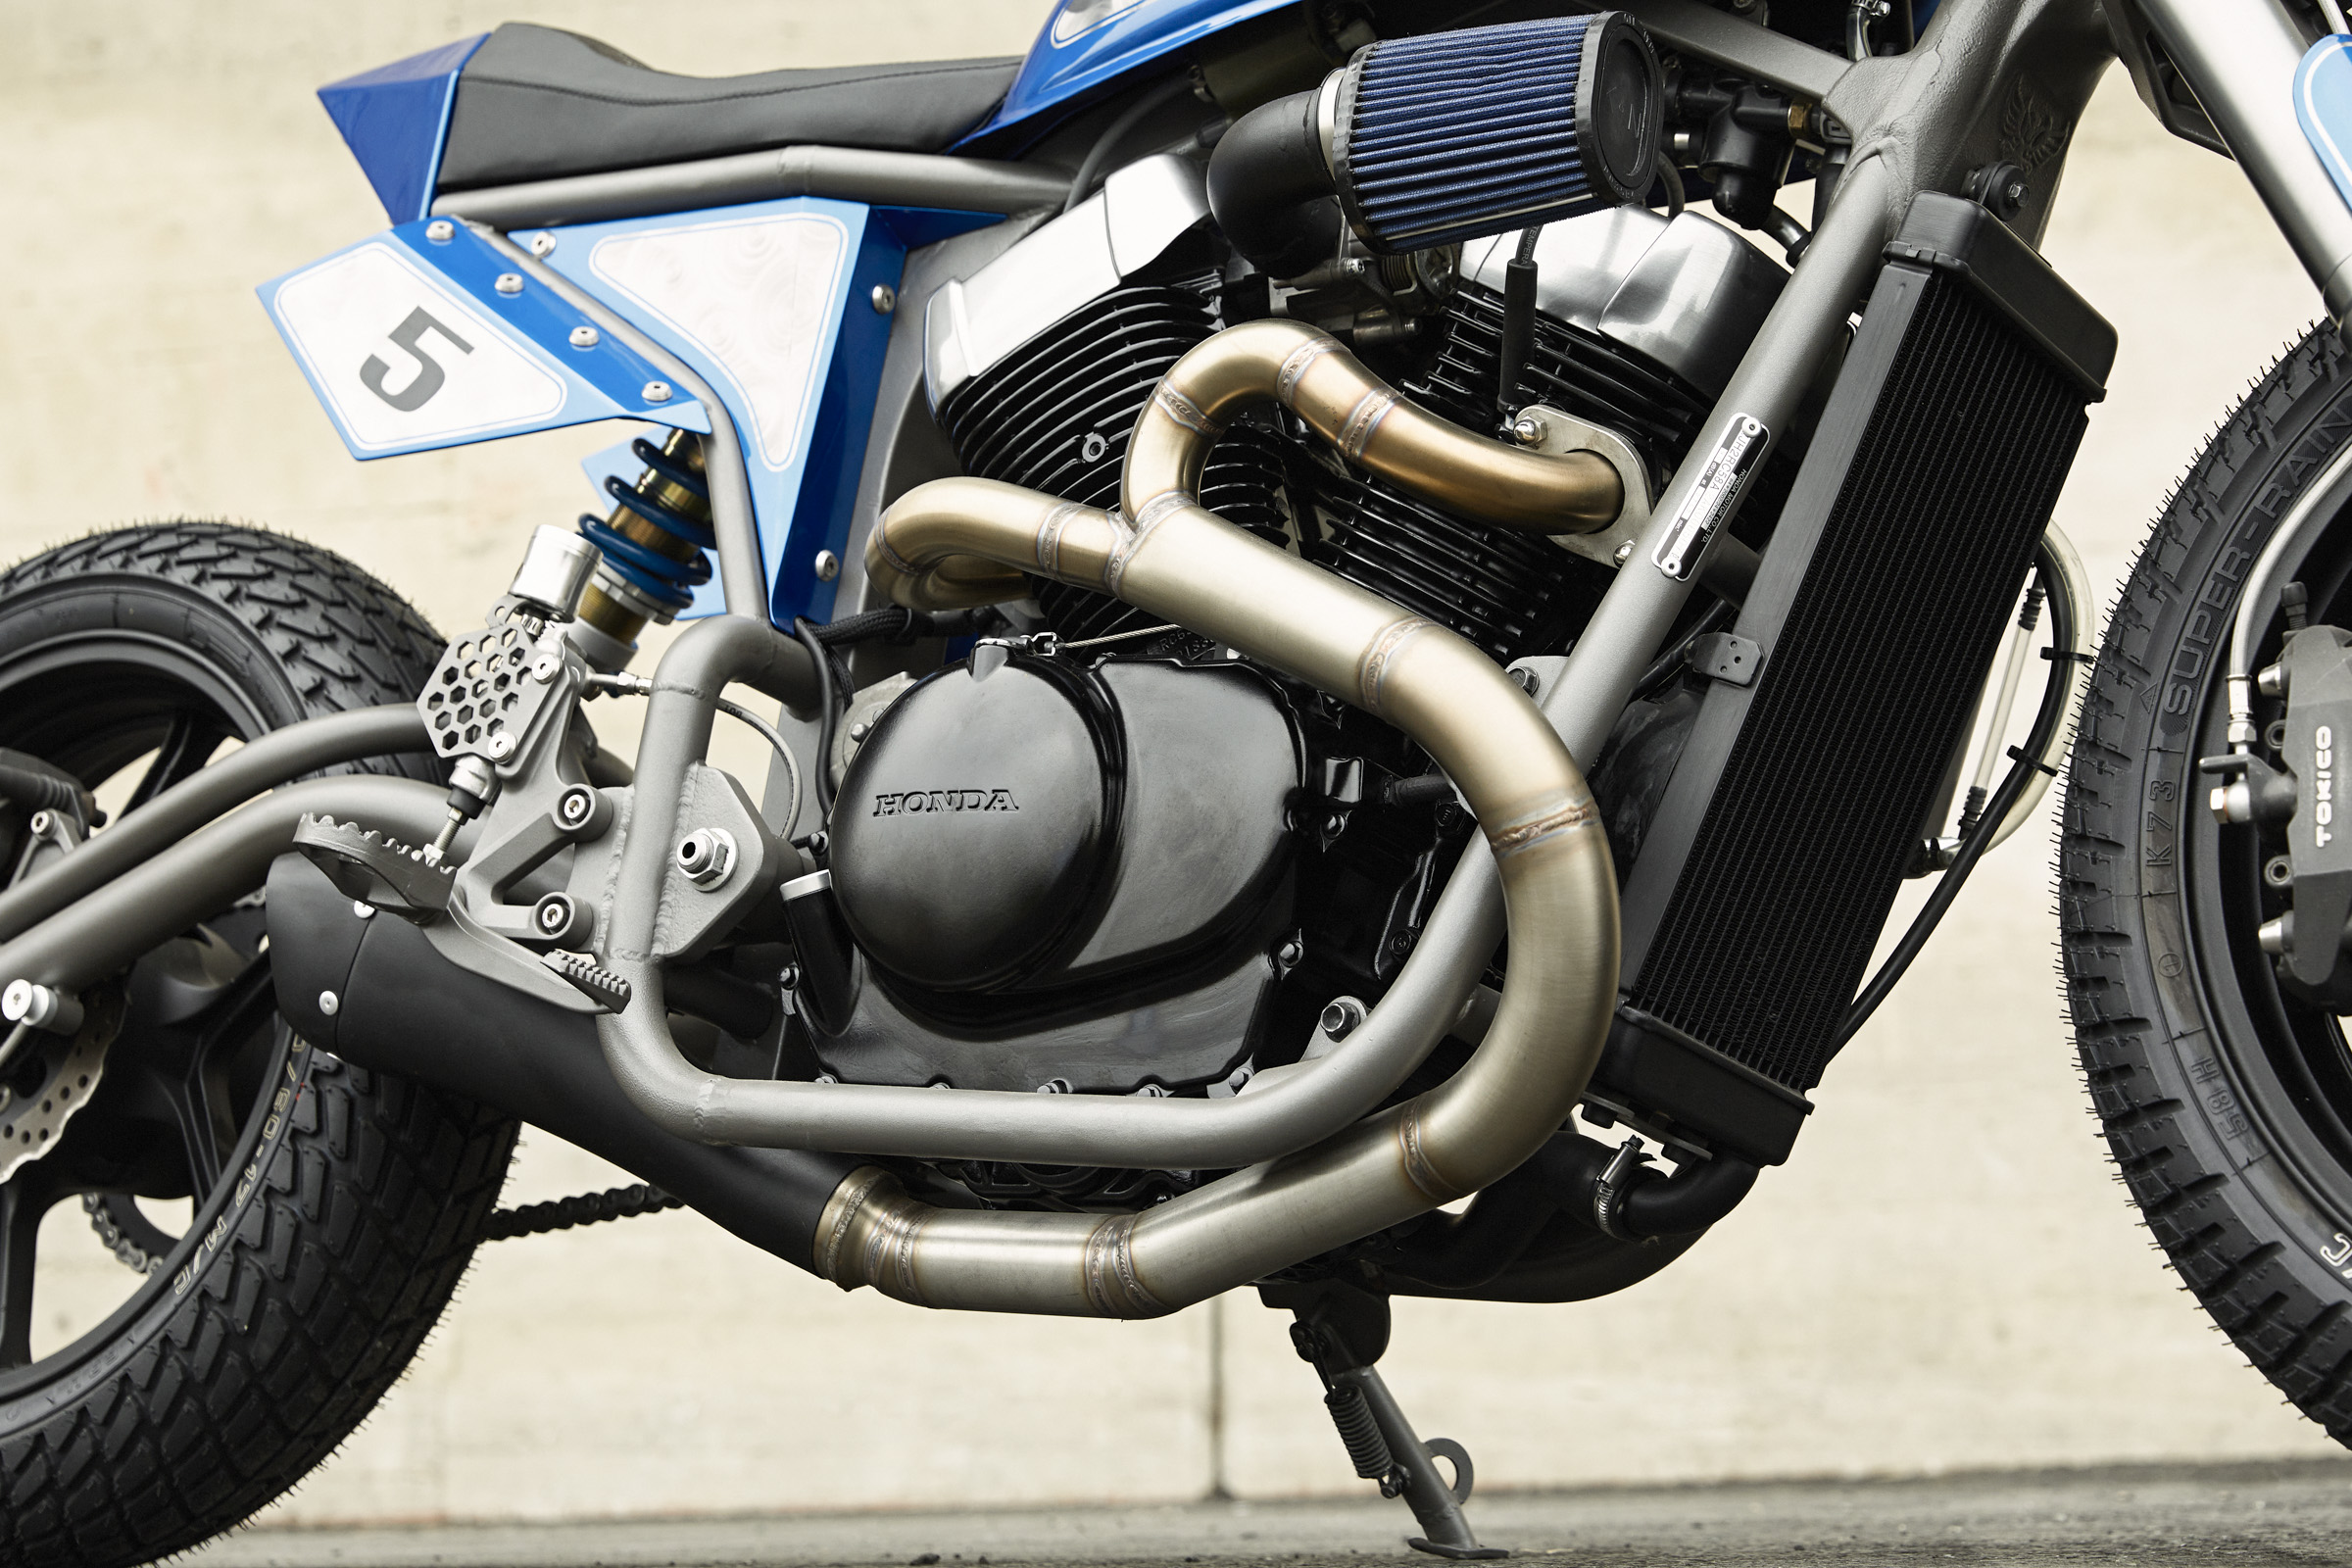 Honda Shadow 750 custom steel bike 